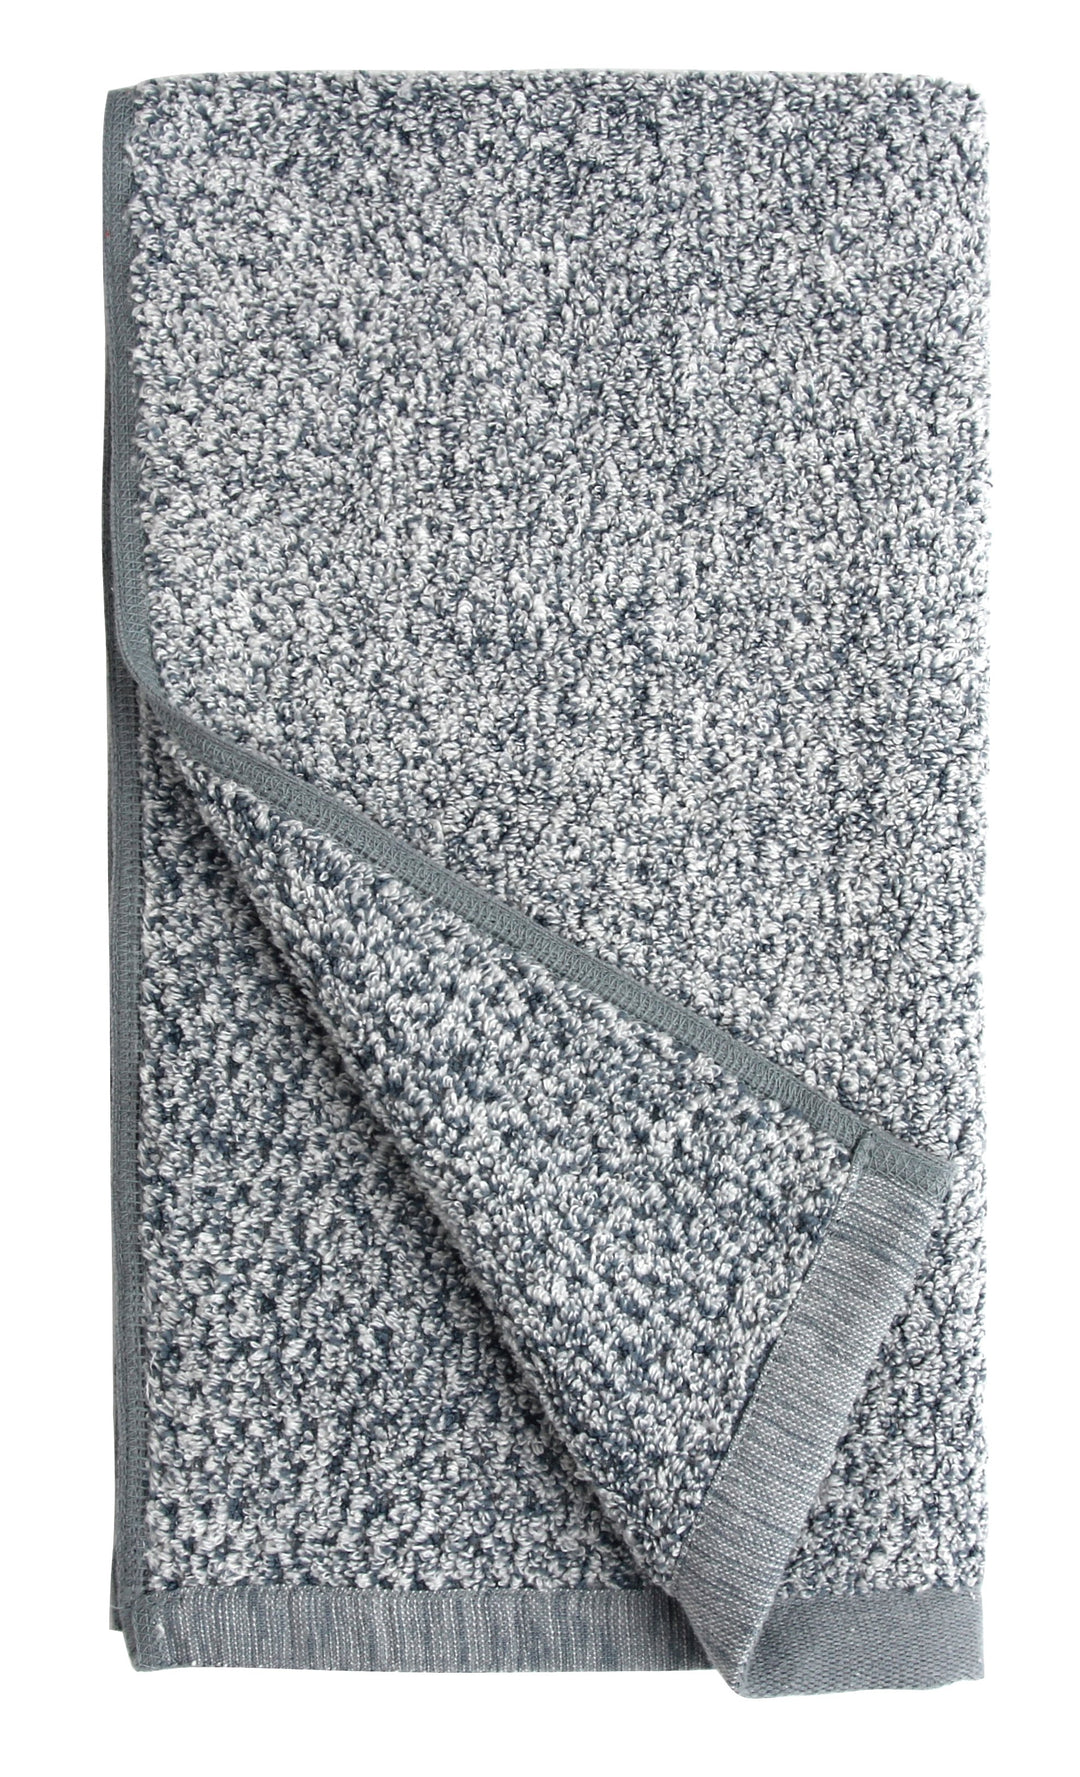 Everplush Diamond Jacquard Quick Dry Bath Towel, 1 Pack, Navy Blue